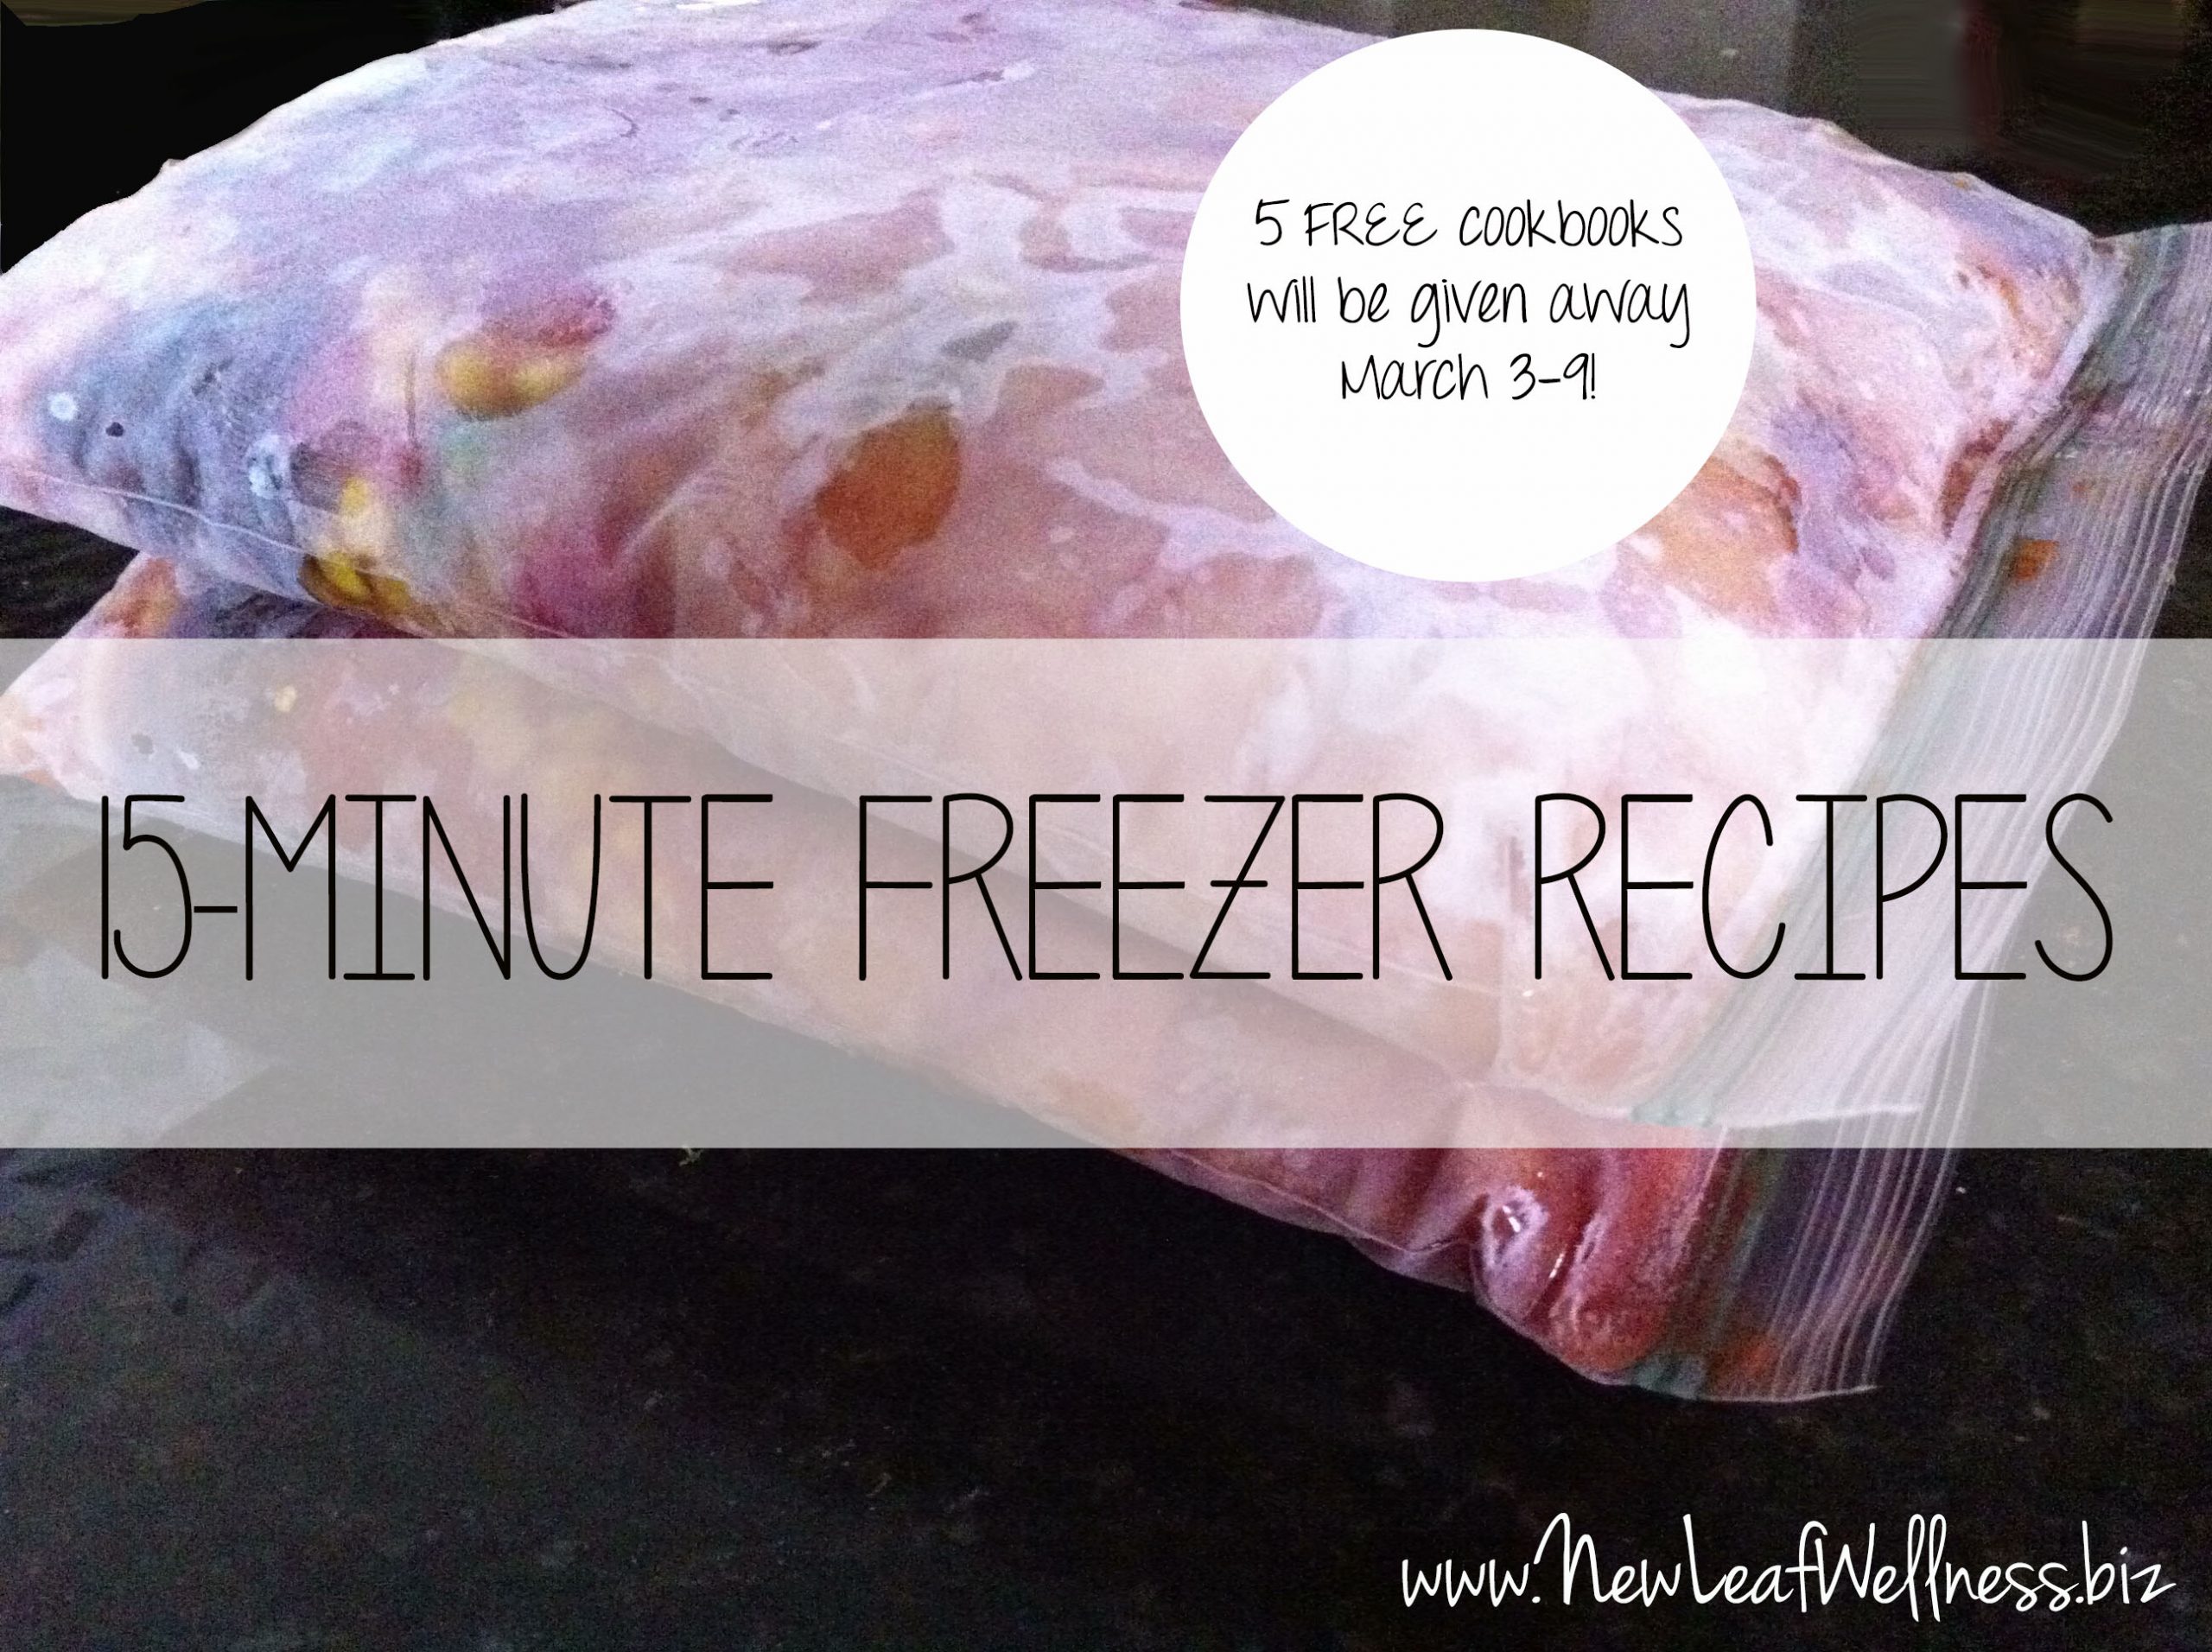 15-Minute Freezer Recipes Cookbook Giveaway